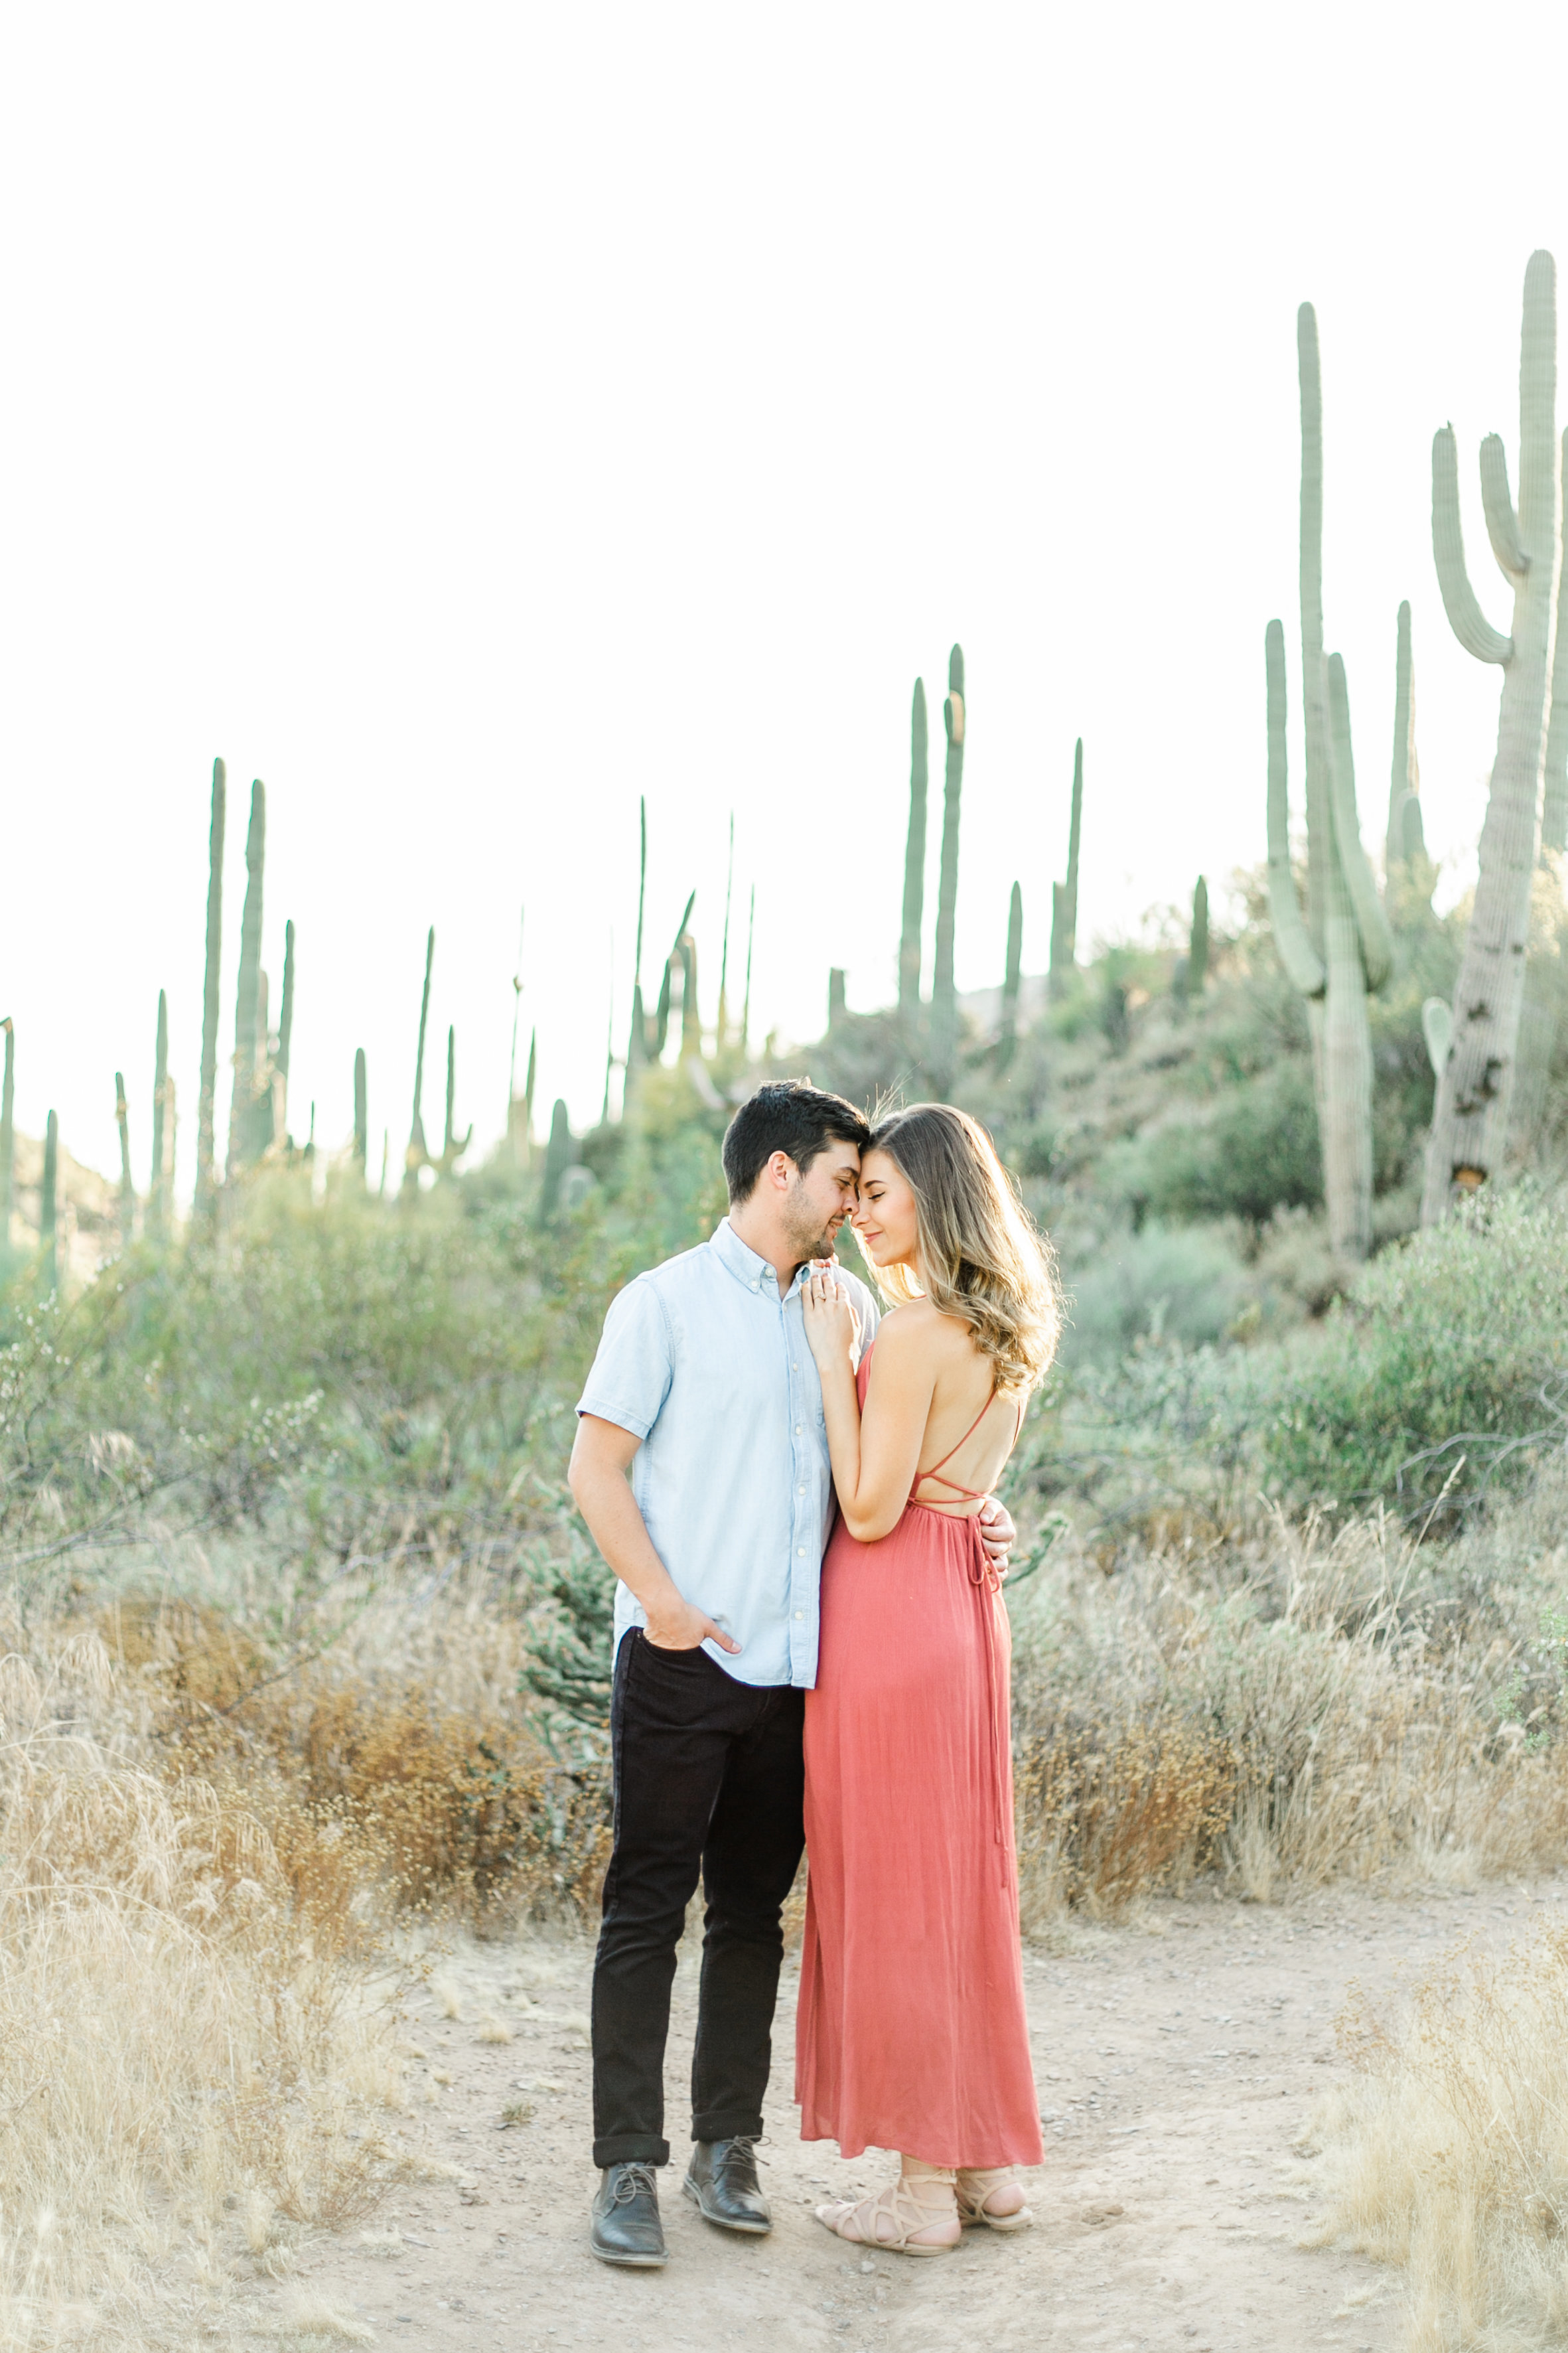 Karlie Colleen Photography - Arizona Desert Engagement - Brynne & Josh -89